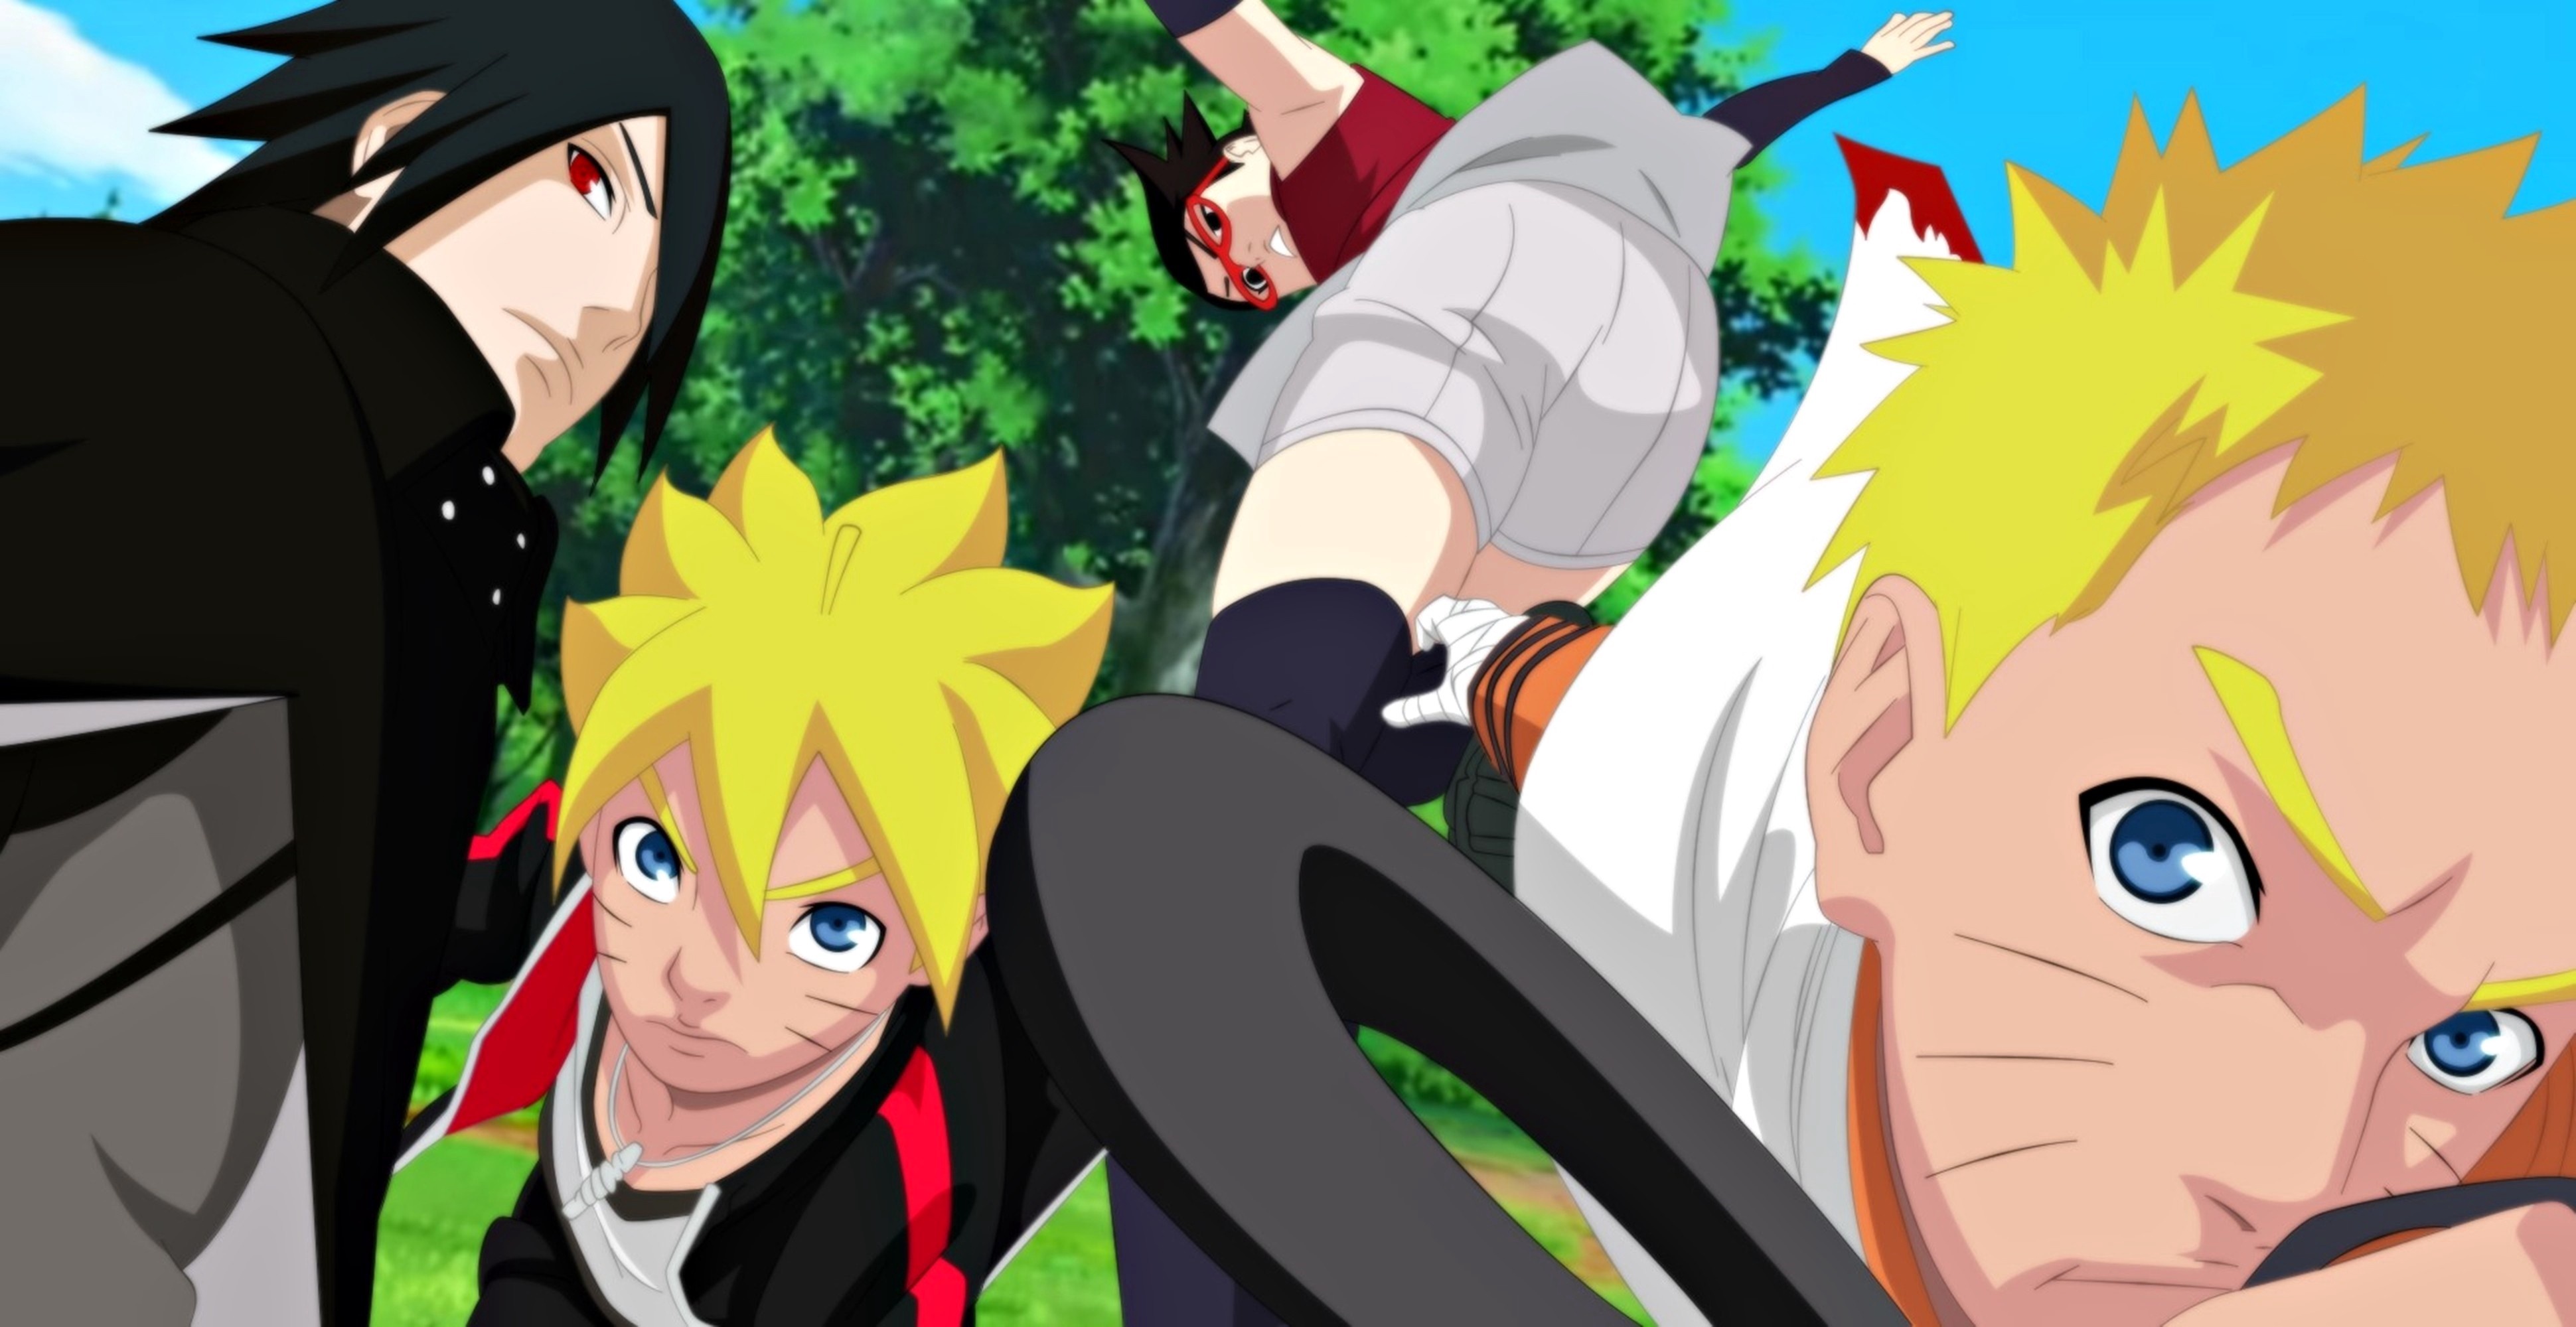 Naruto,Boruto,Sasuke and Sarada Full HD Wallpaper and Background Image | 3881x2000 | ID:644150